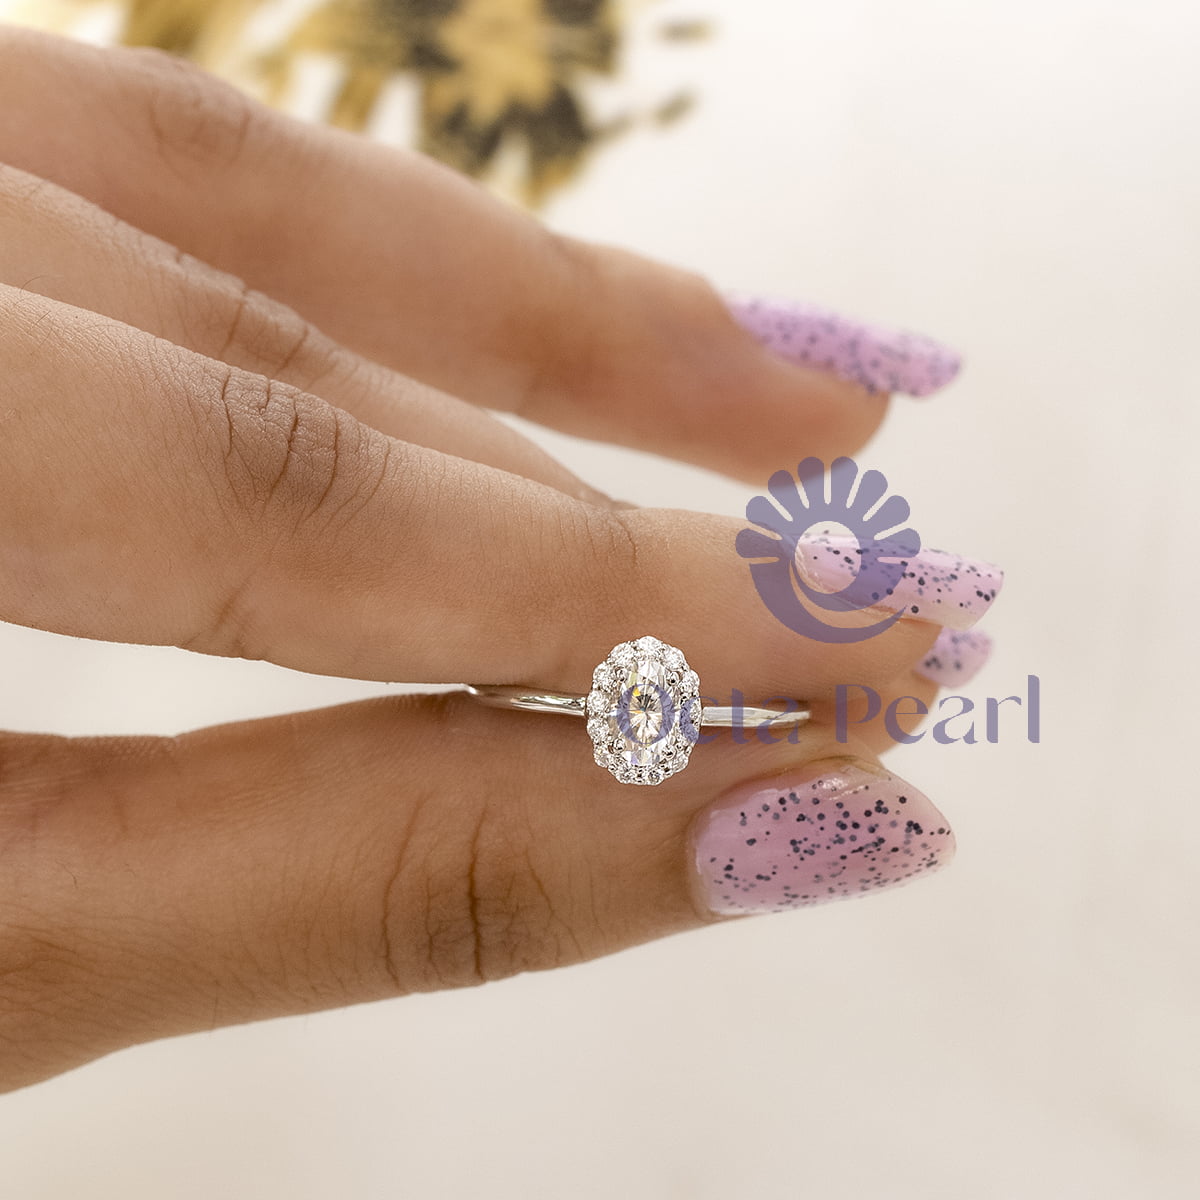 Oval Cut CZ Stone Halo Set Engagement Bride Proposal Ring